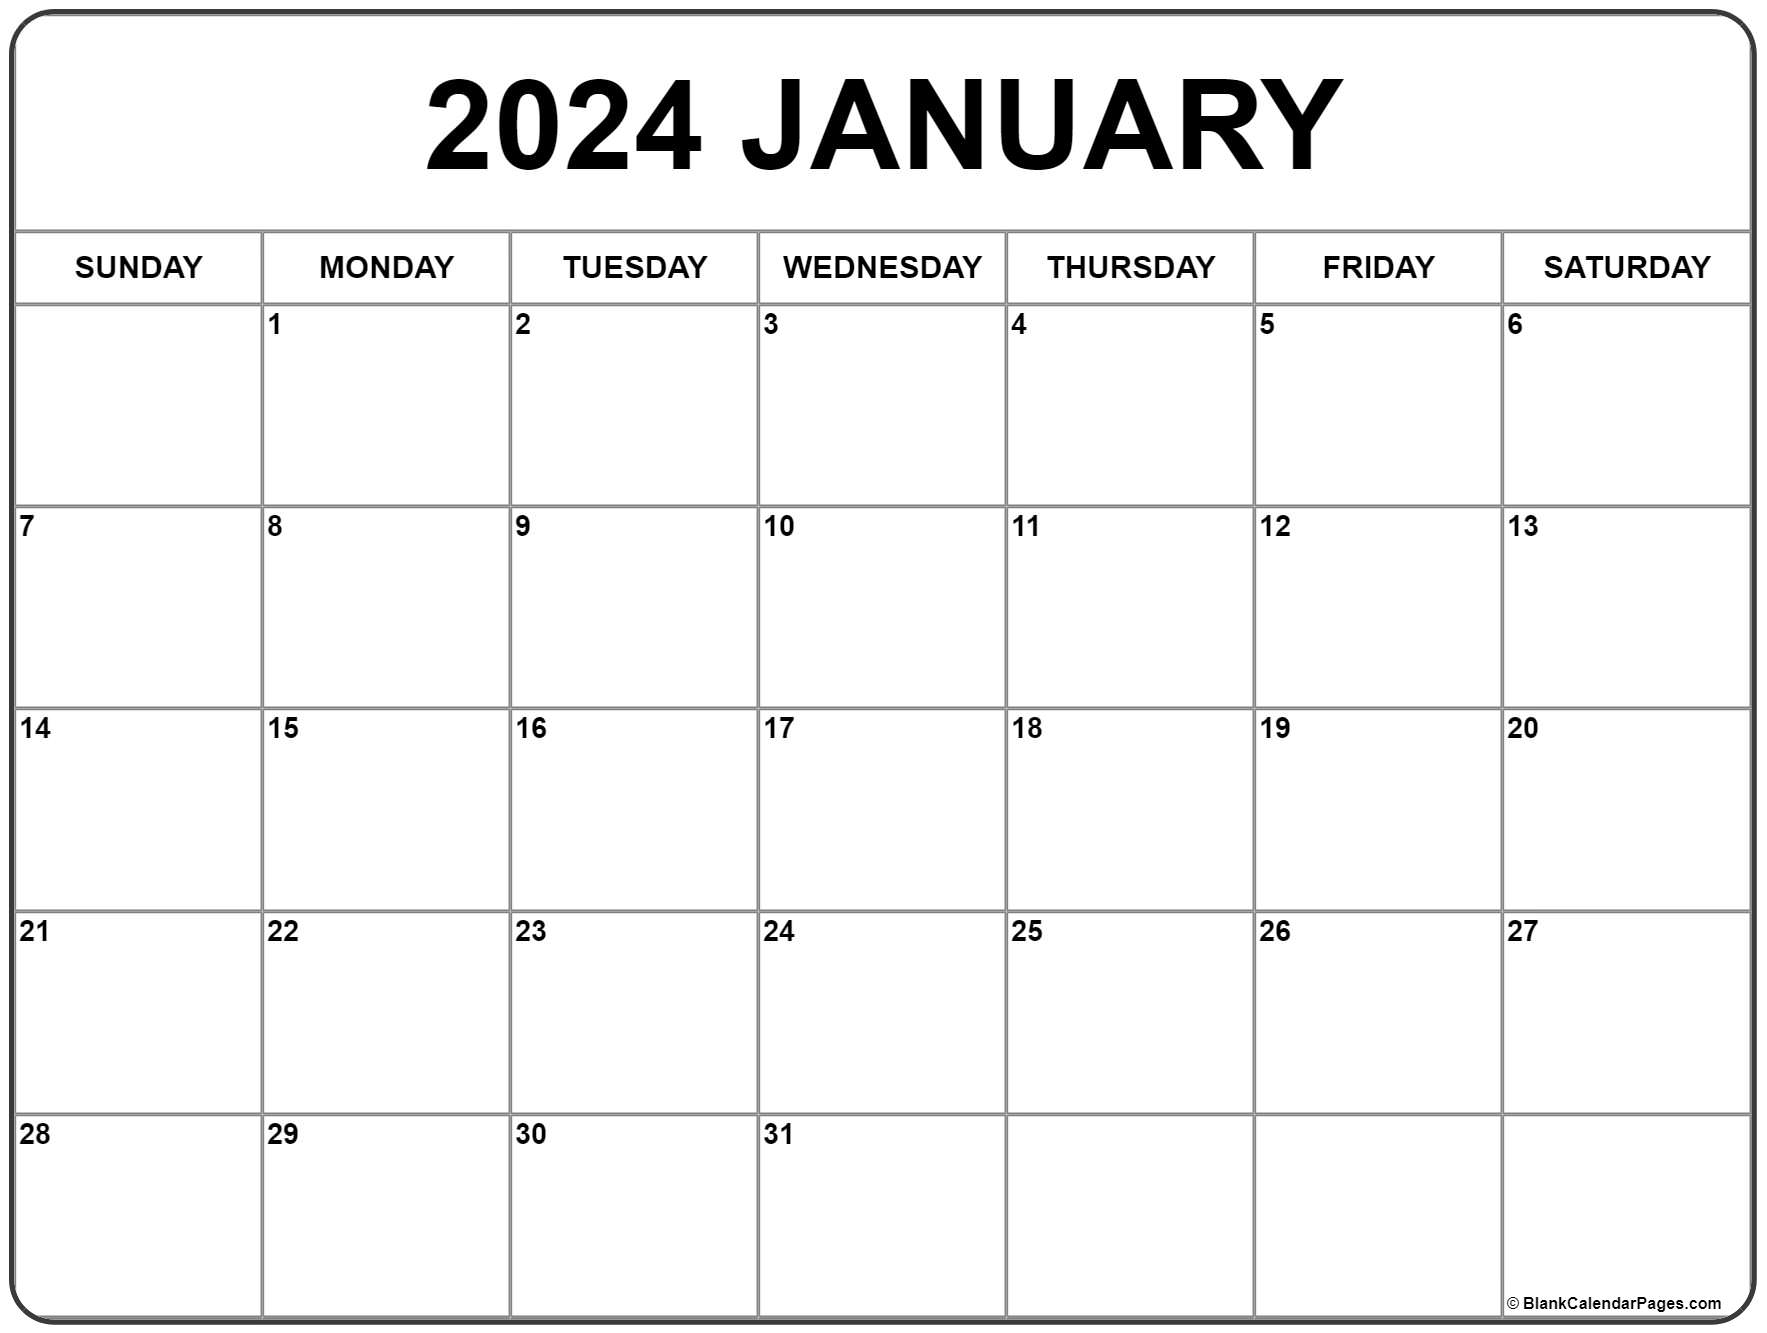 Calendar January 2021 Printable January 2021 calendar | free printable monthly calendars